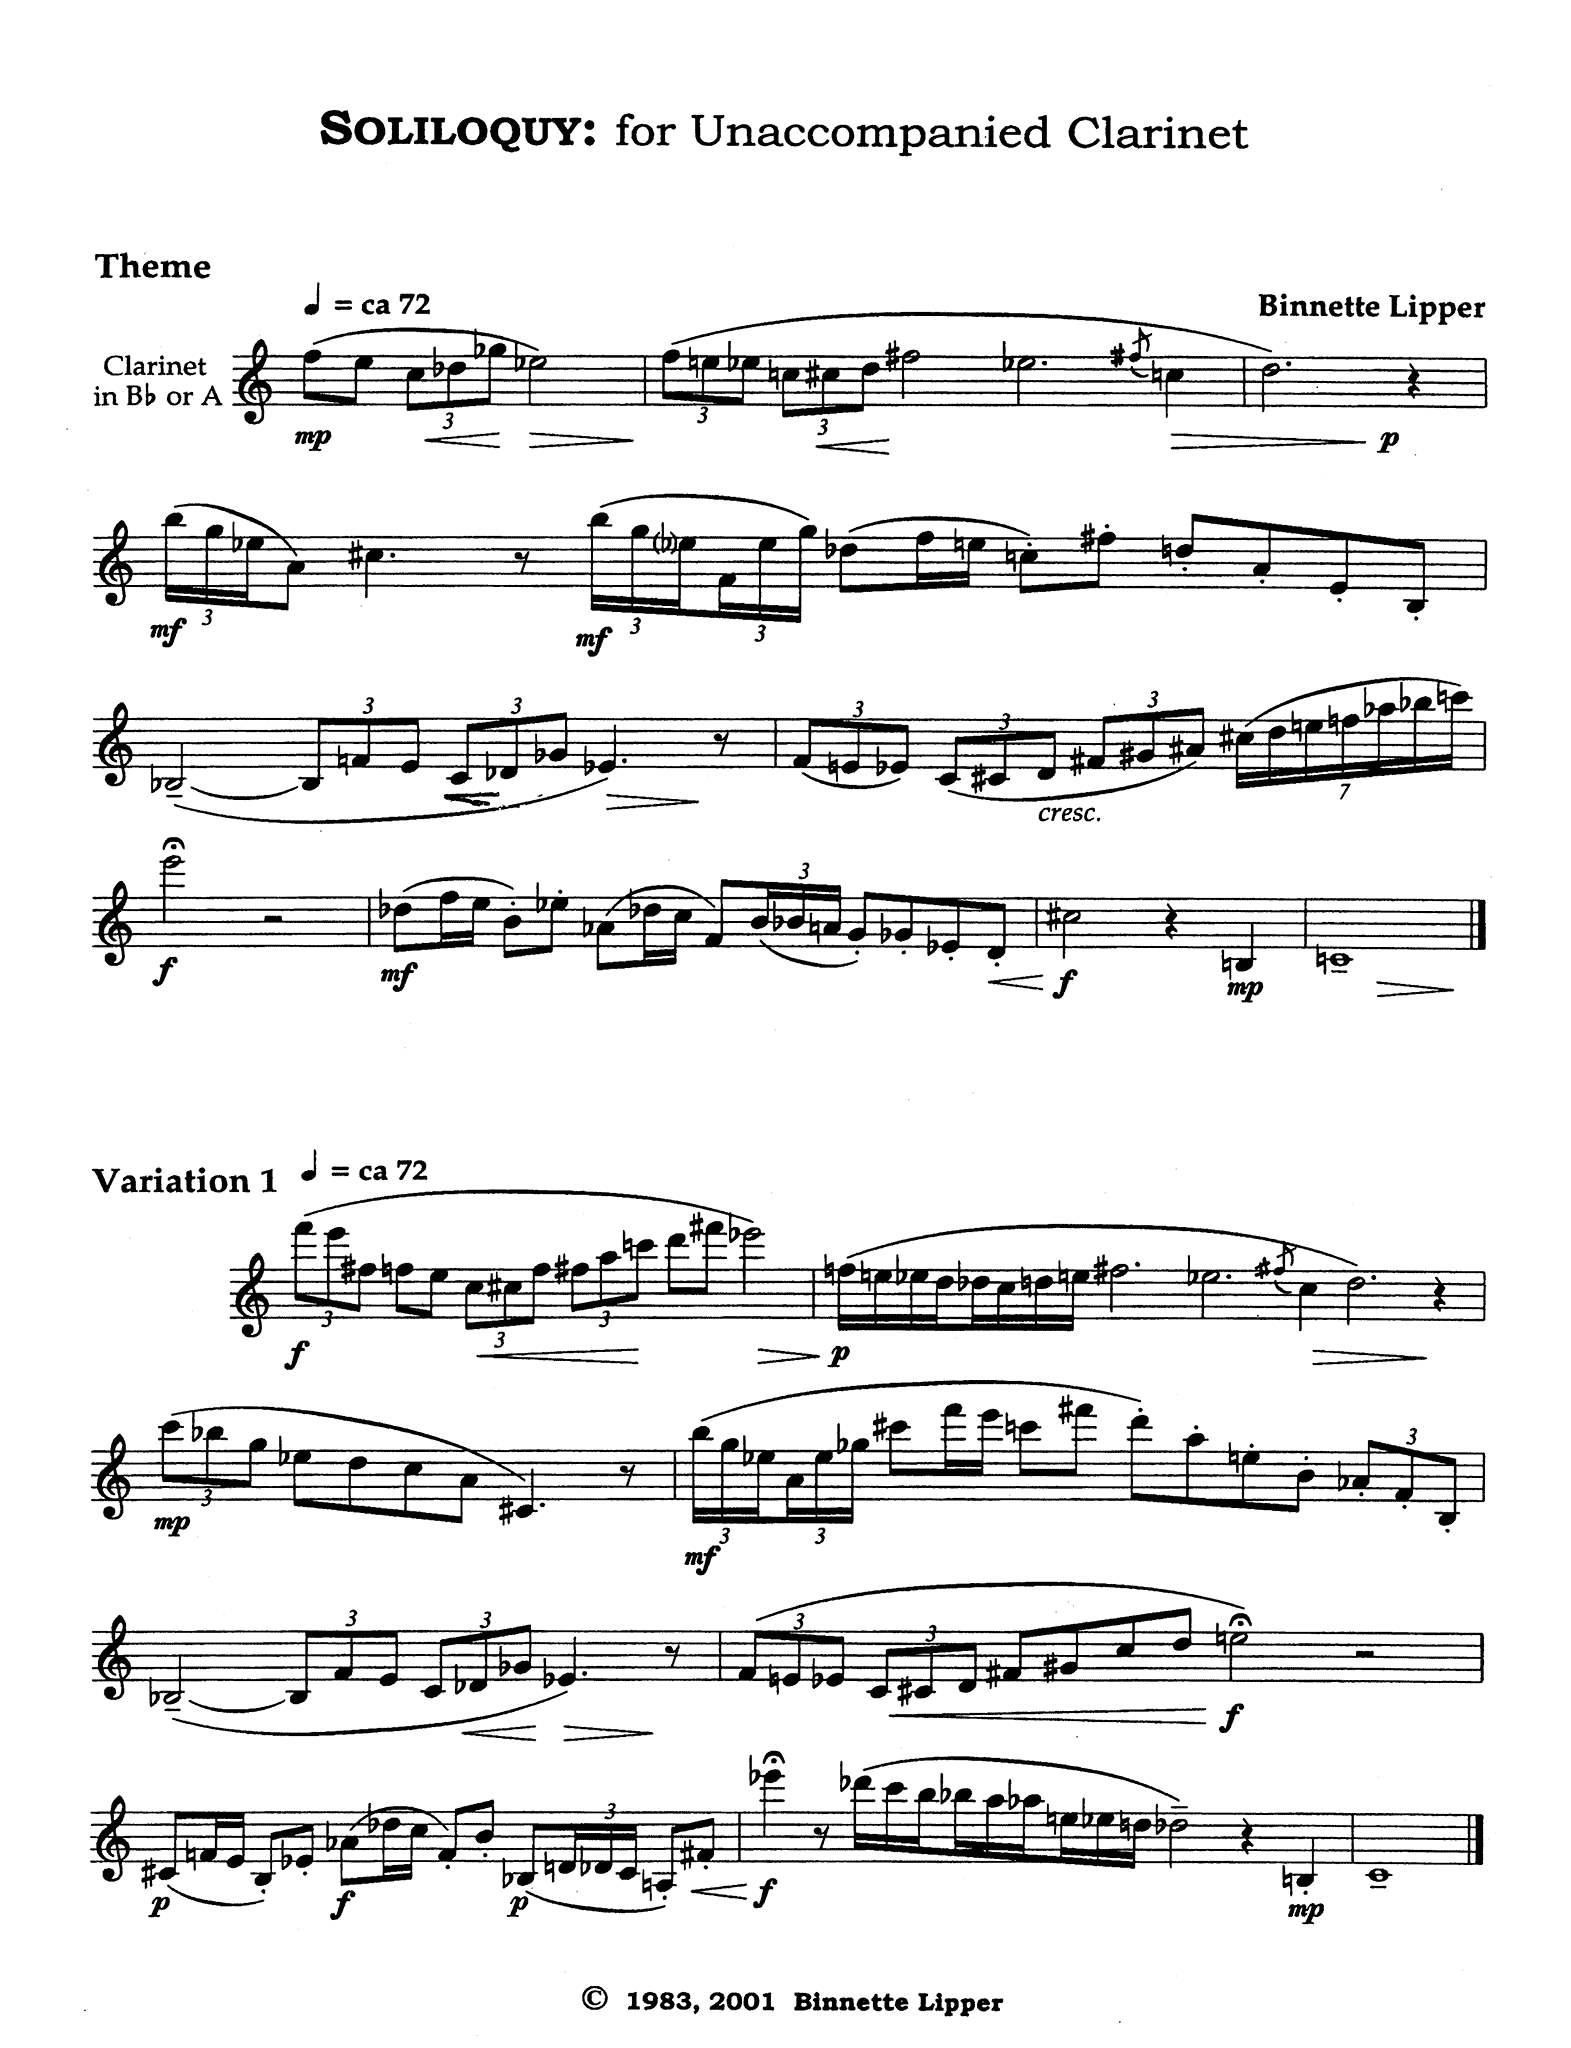 Binnette Lipper Soliloquy unaccompanied clarinet page 1